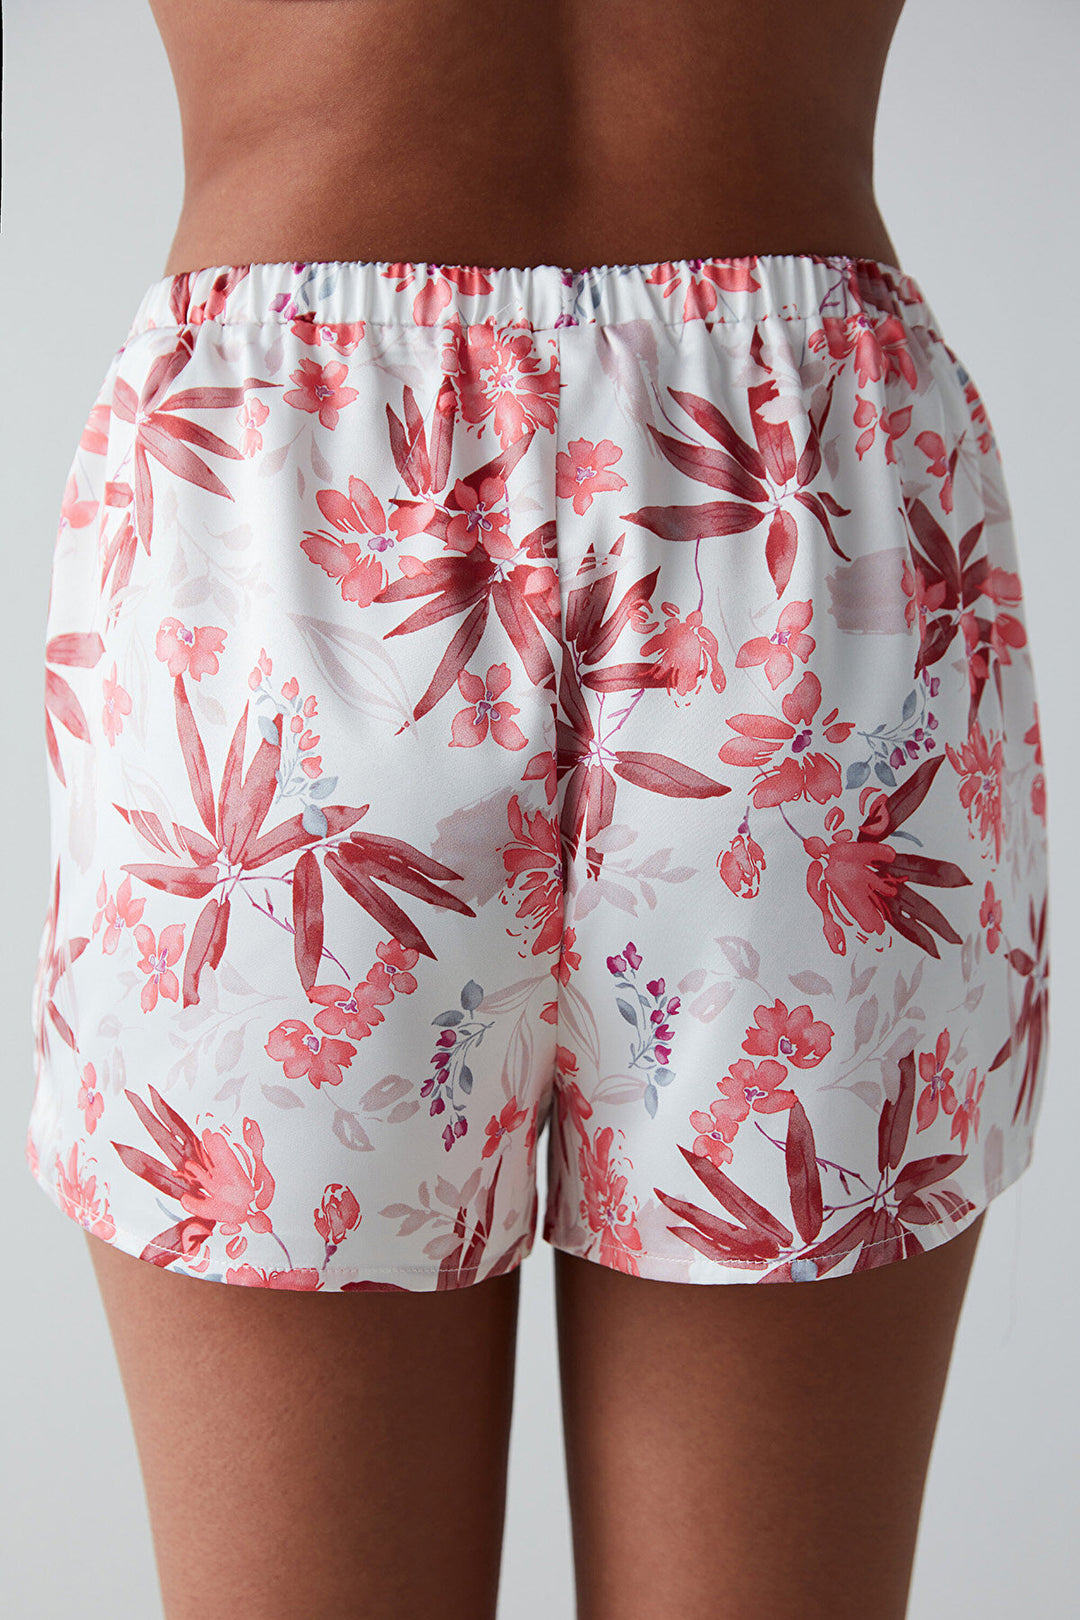 Rosy Printed Satin Shorts PJ Bottom